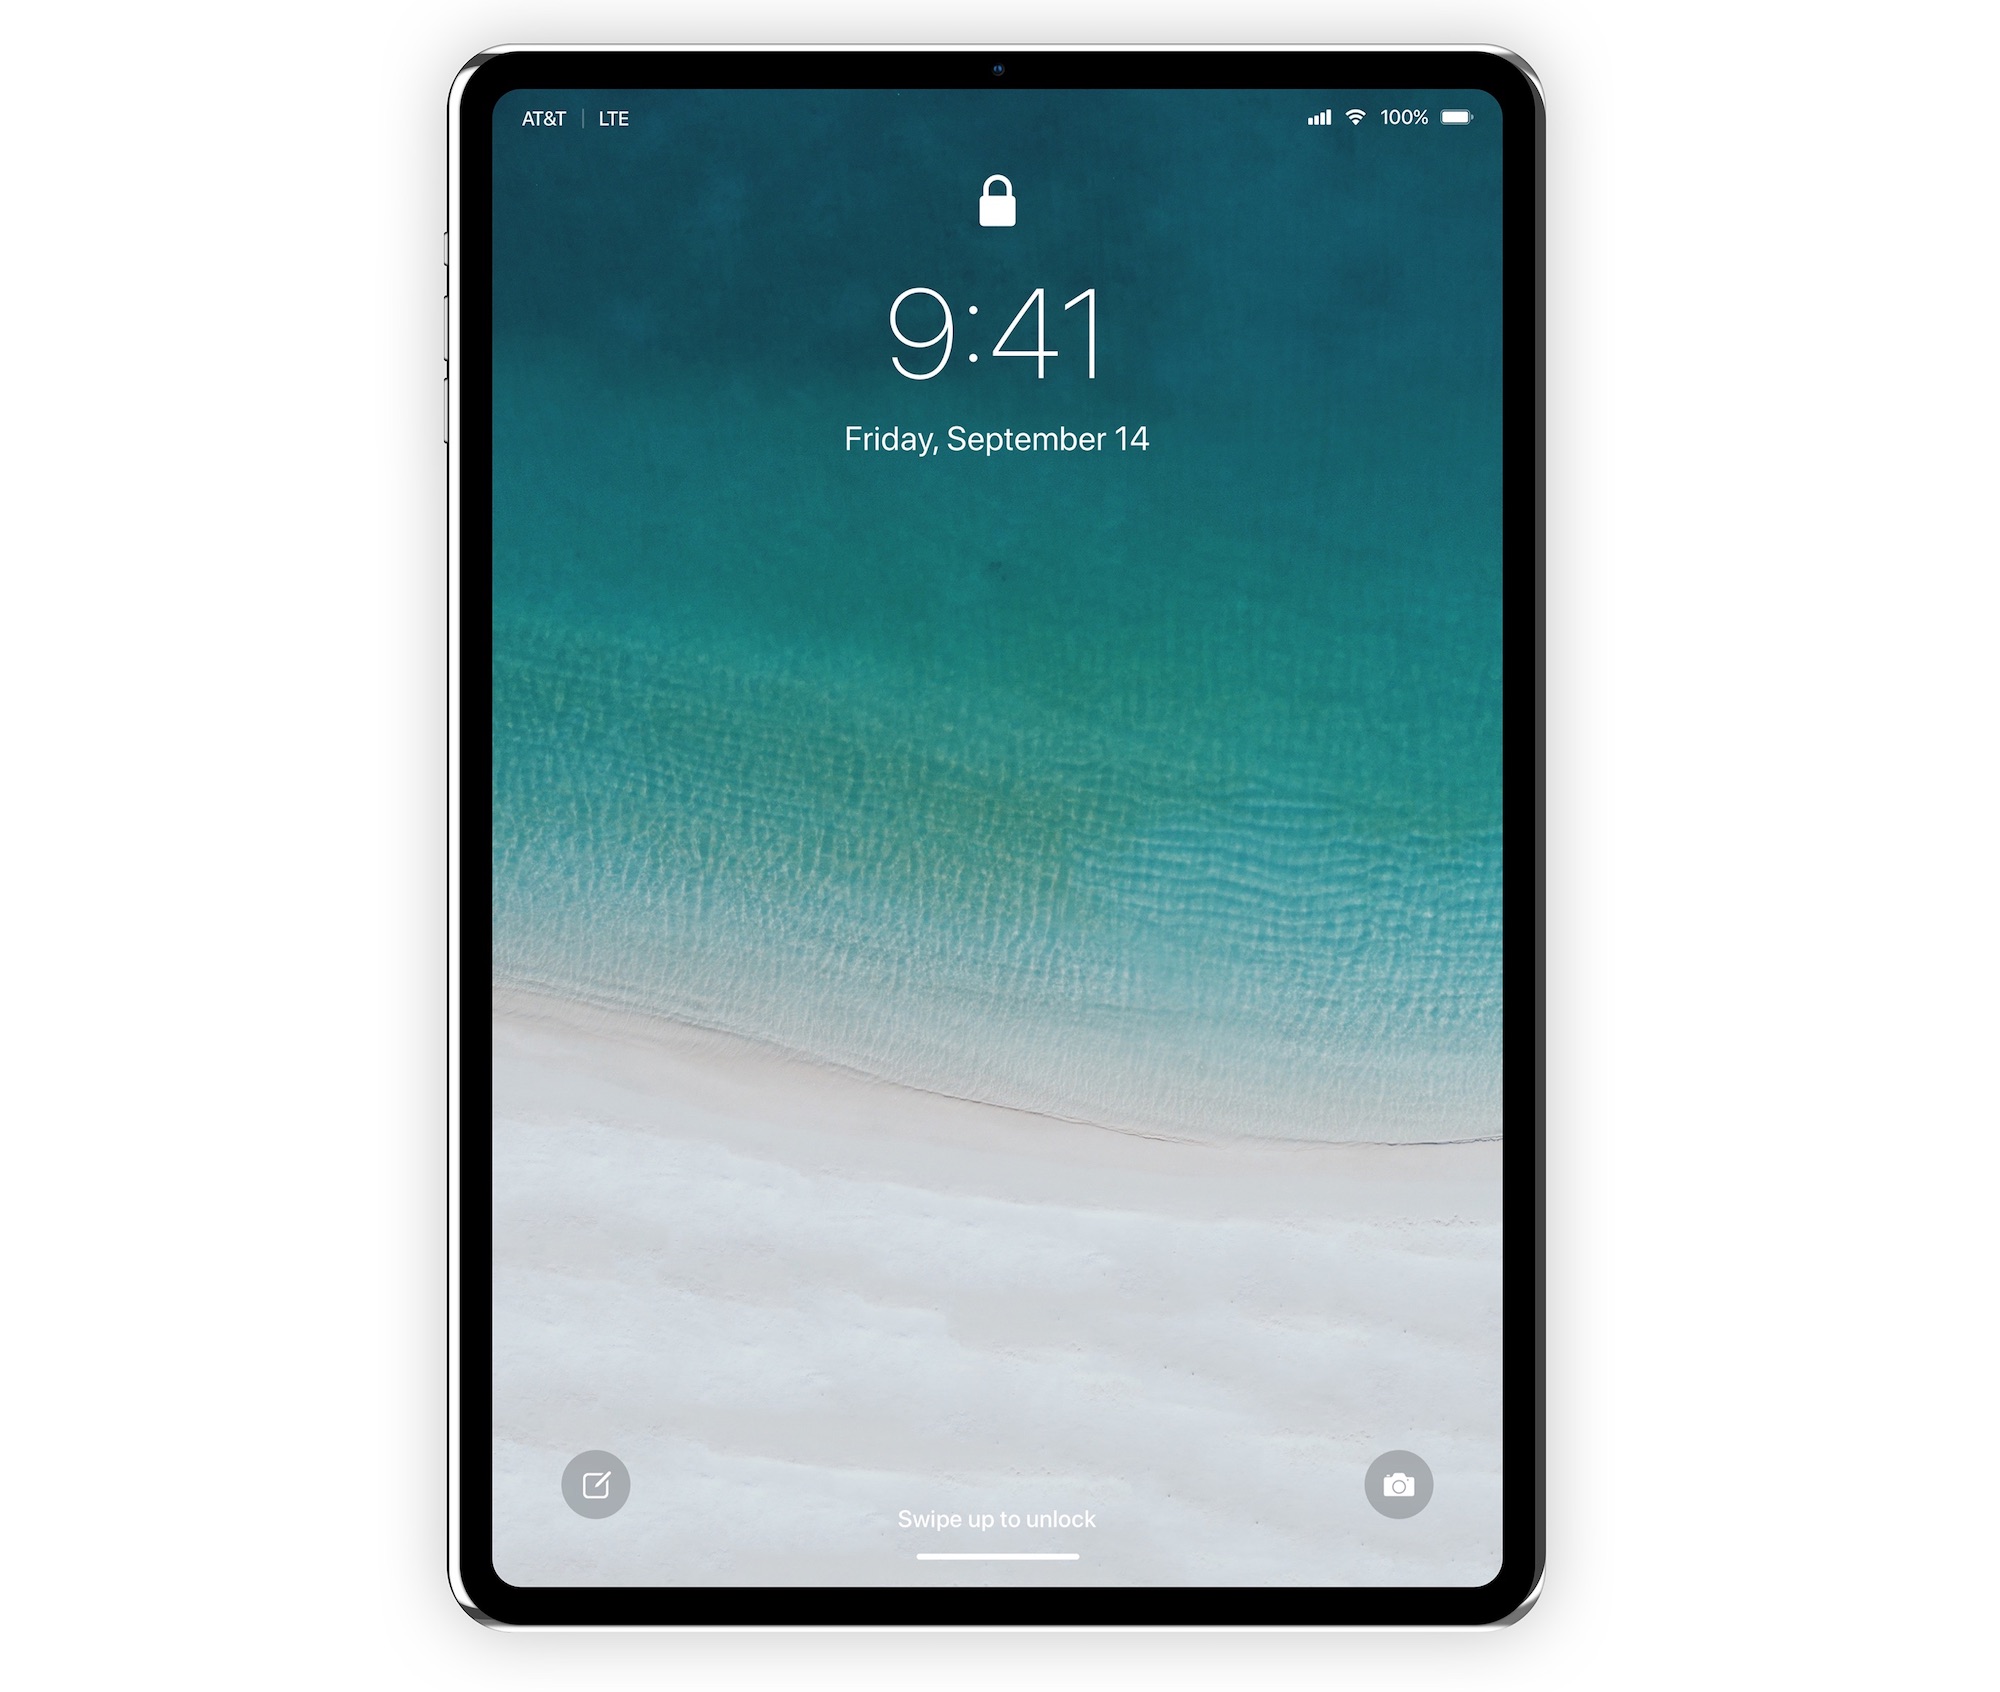 2018 iPad Pro concept image